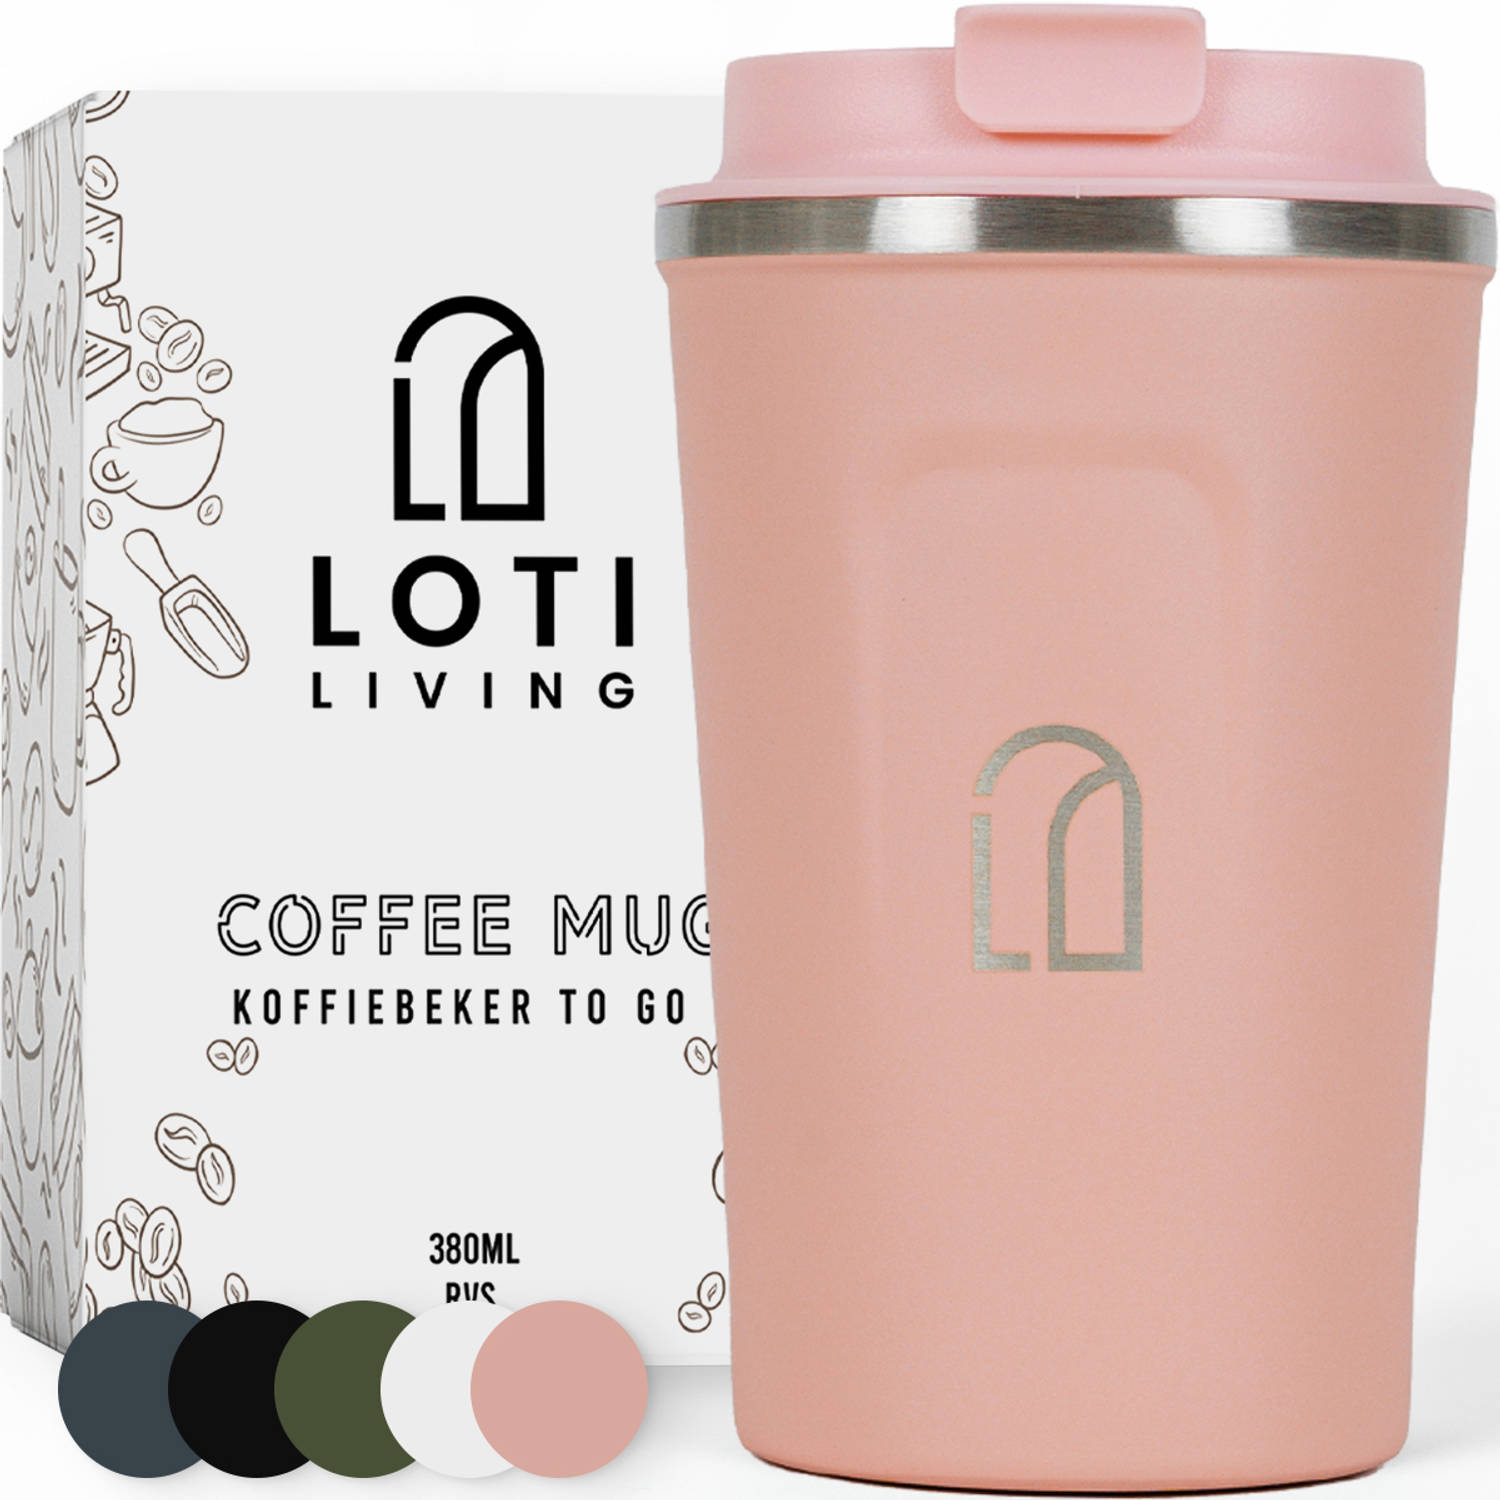 Loti Living Koffiebeker To Go - Thermosbeker - Koffiebeker onderweg - Theebeker - Travel mug - 380ml - Roze